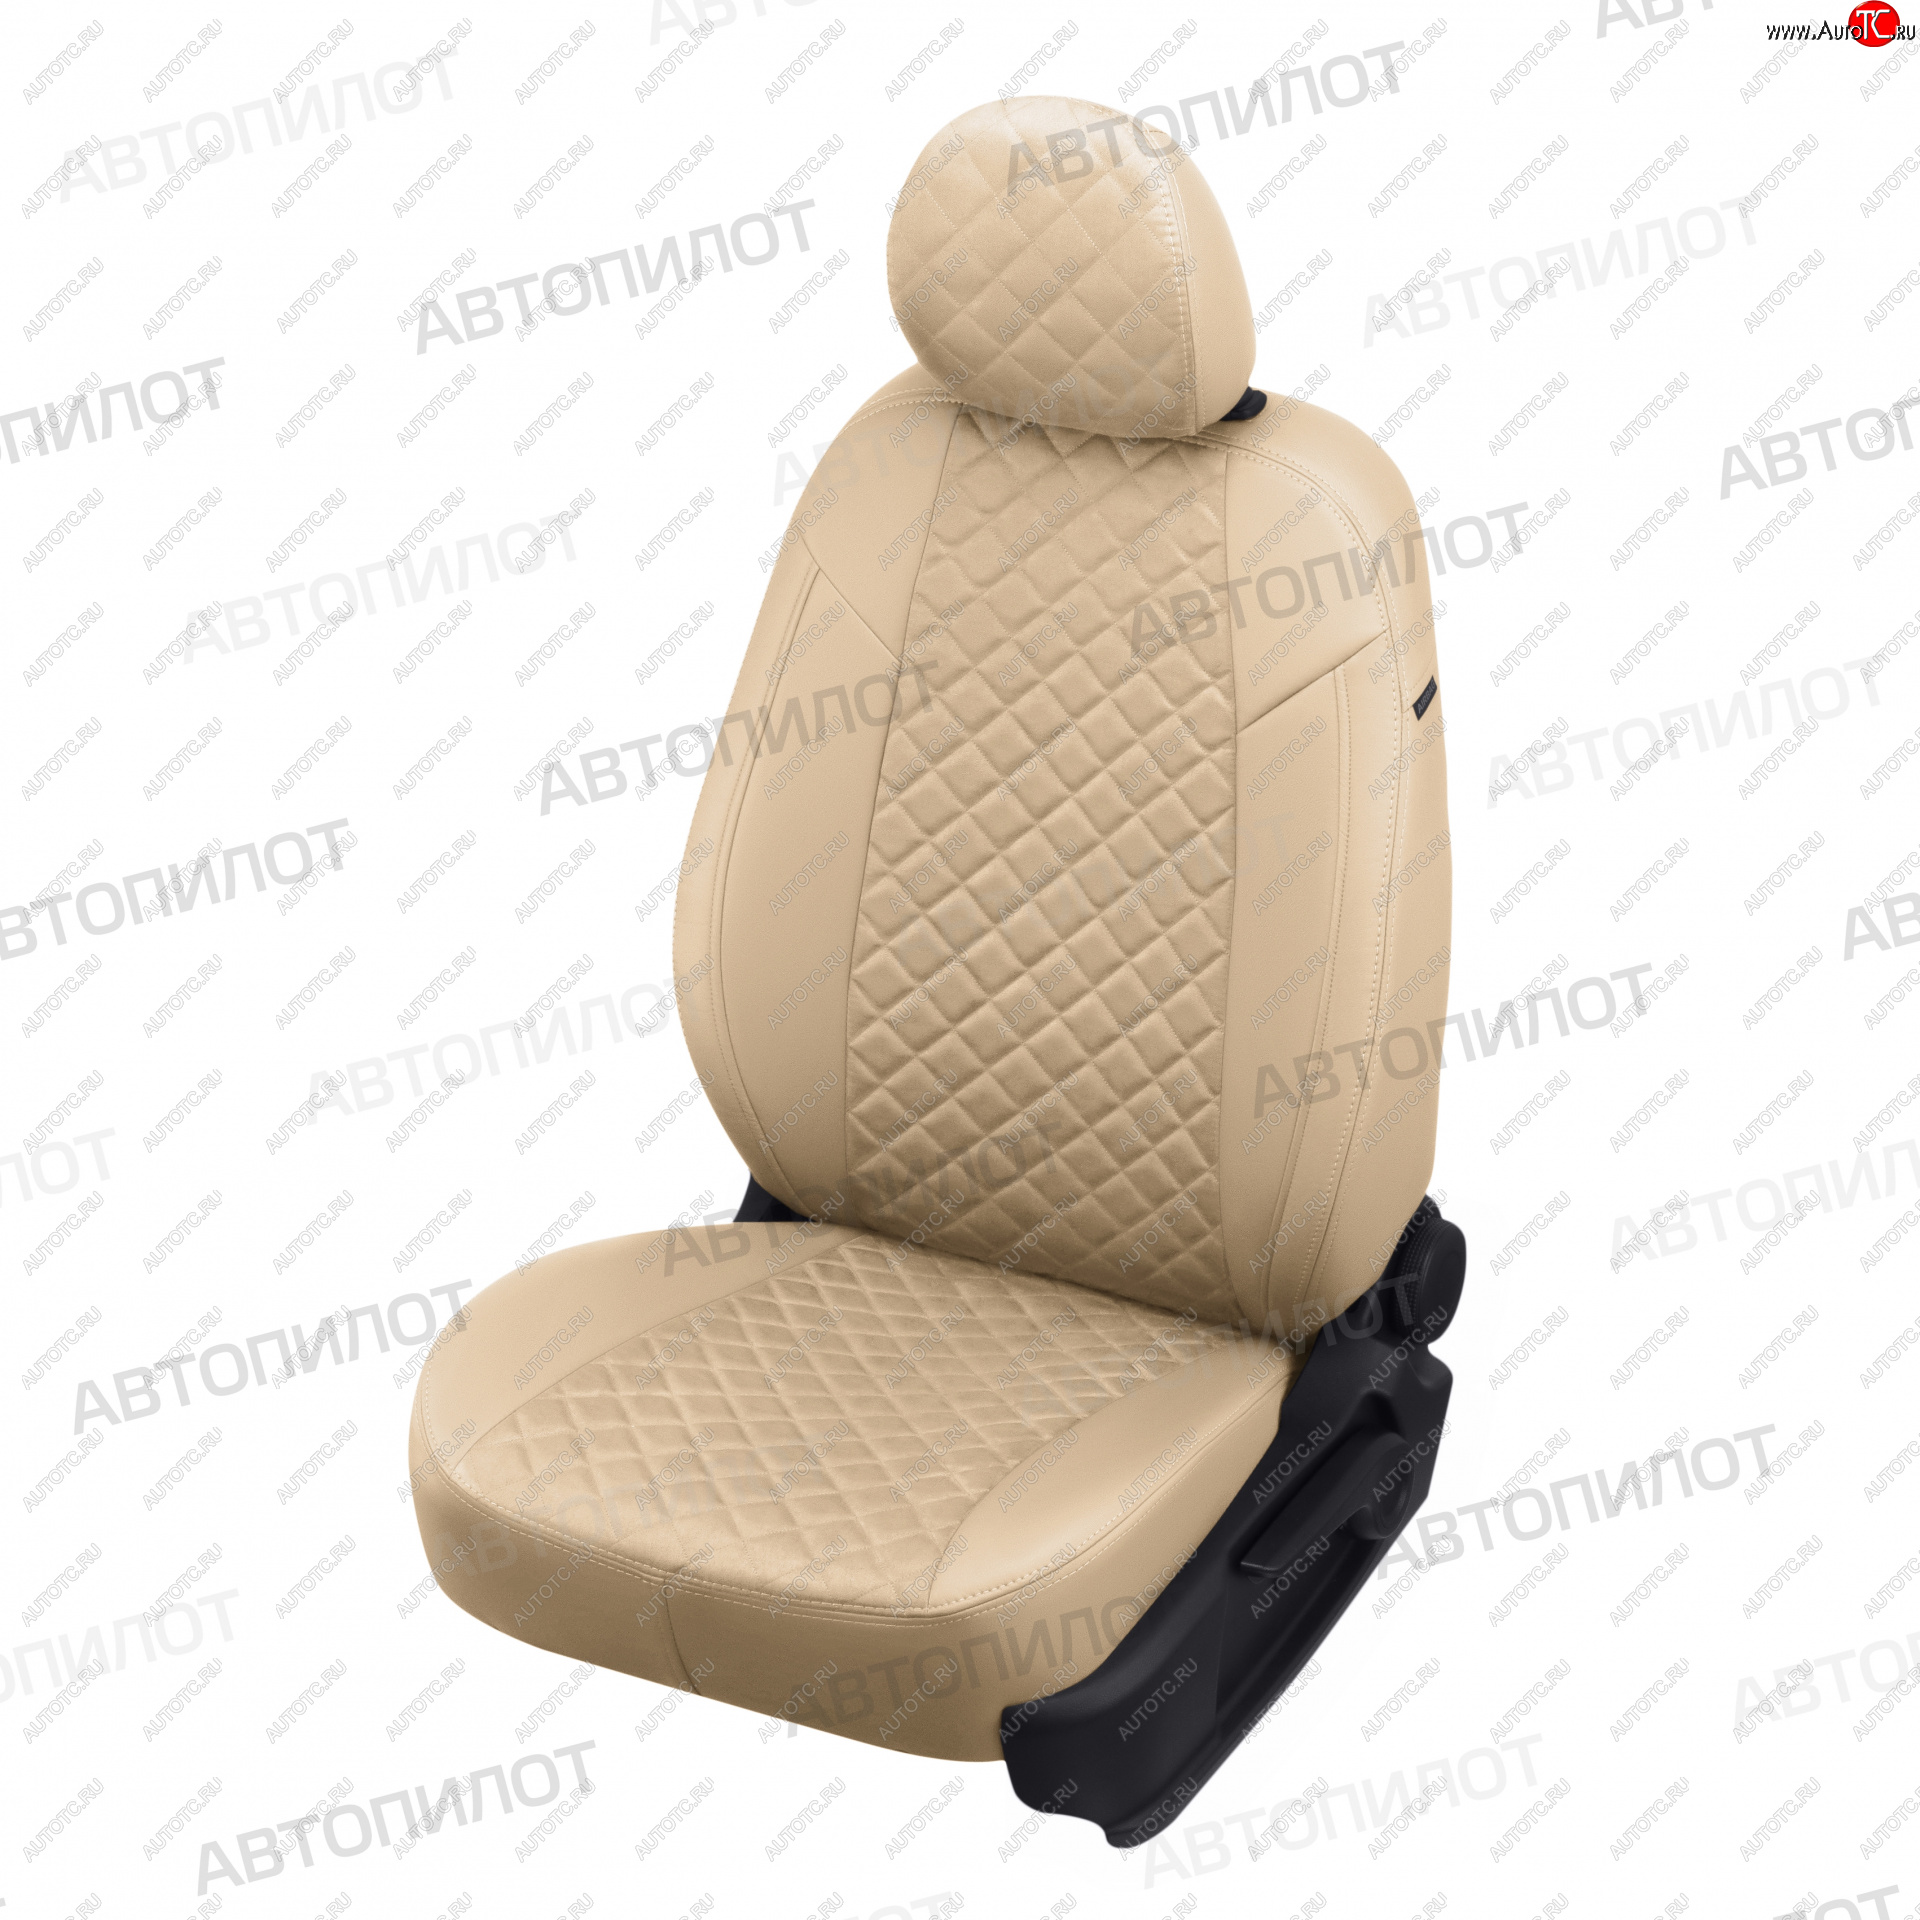 21 599 р. Чехлы сидений (9 мест, экокожа/алькантара) Автопилот Ромб  Ford Transit  3 (2006-2014) (бежевый)